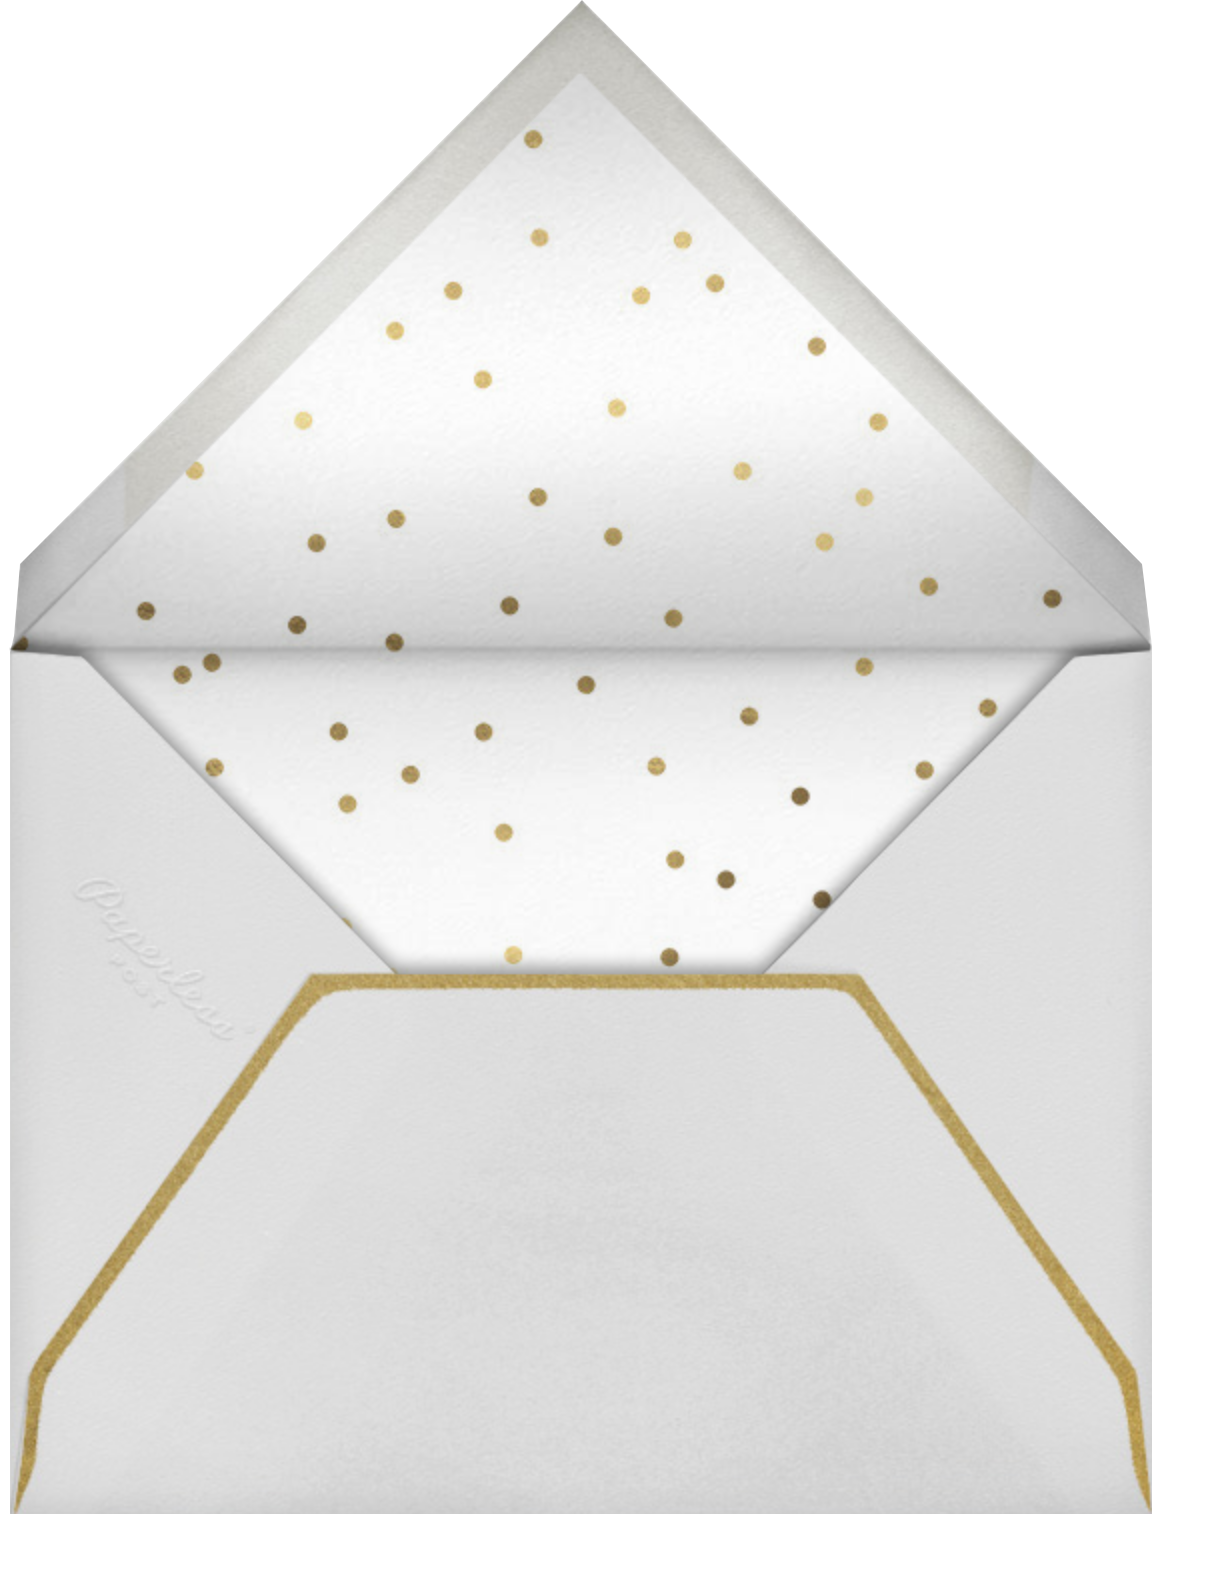 Freehand Filigree - New Year - Paperless Post - Envelope